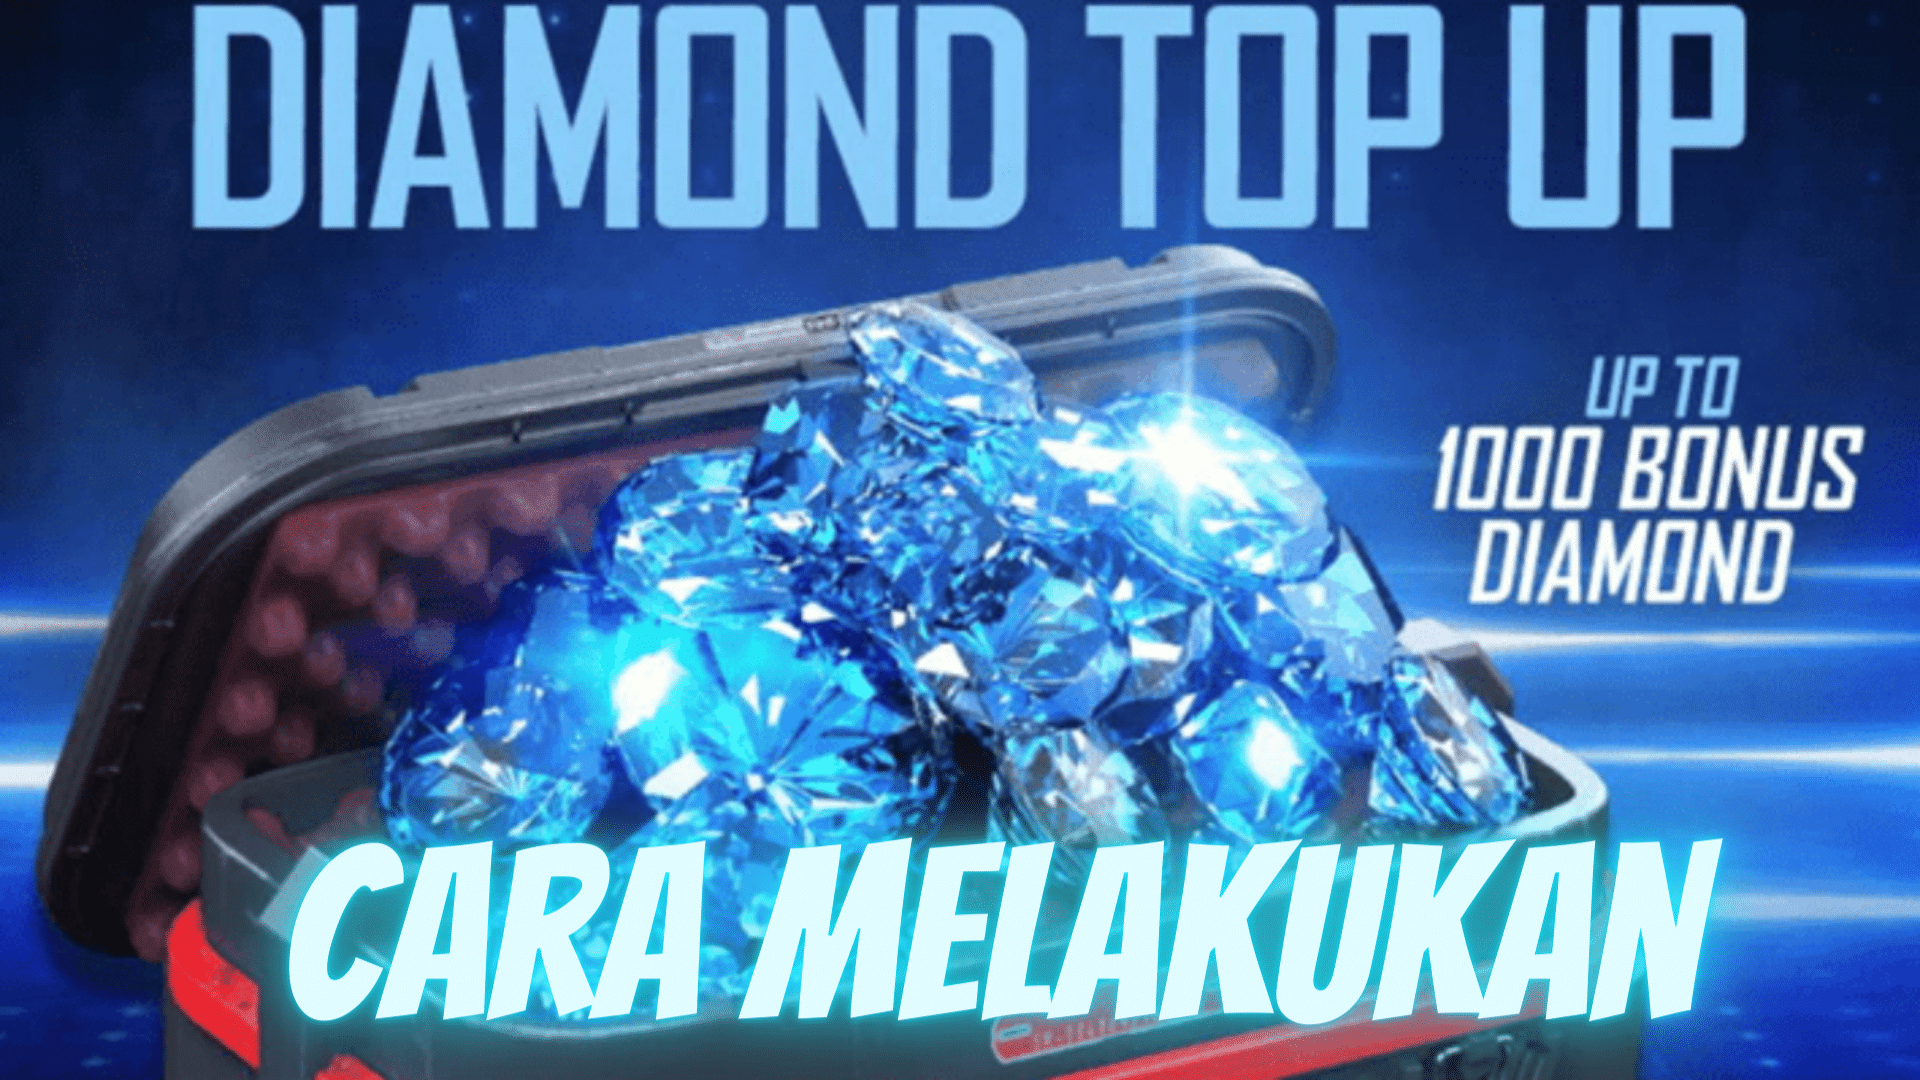 Cara Melakukan Pembelian Diamond Di Top Up Diskon  90 